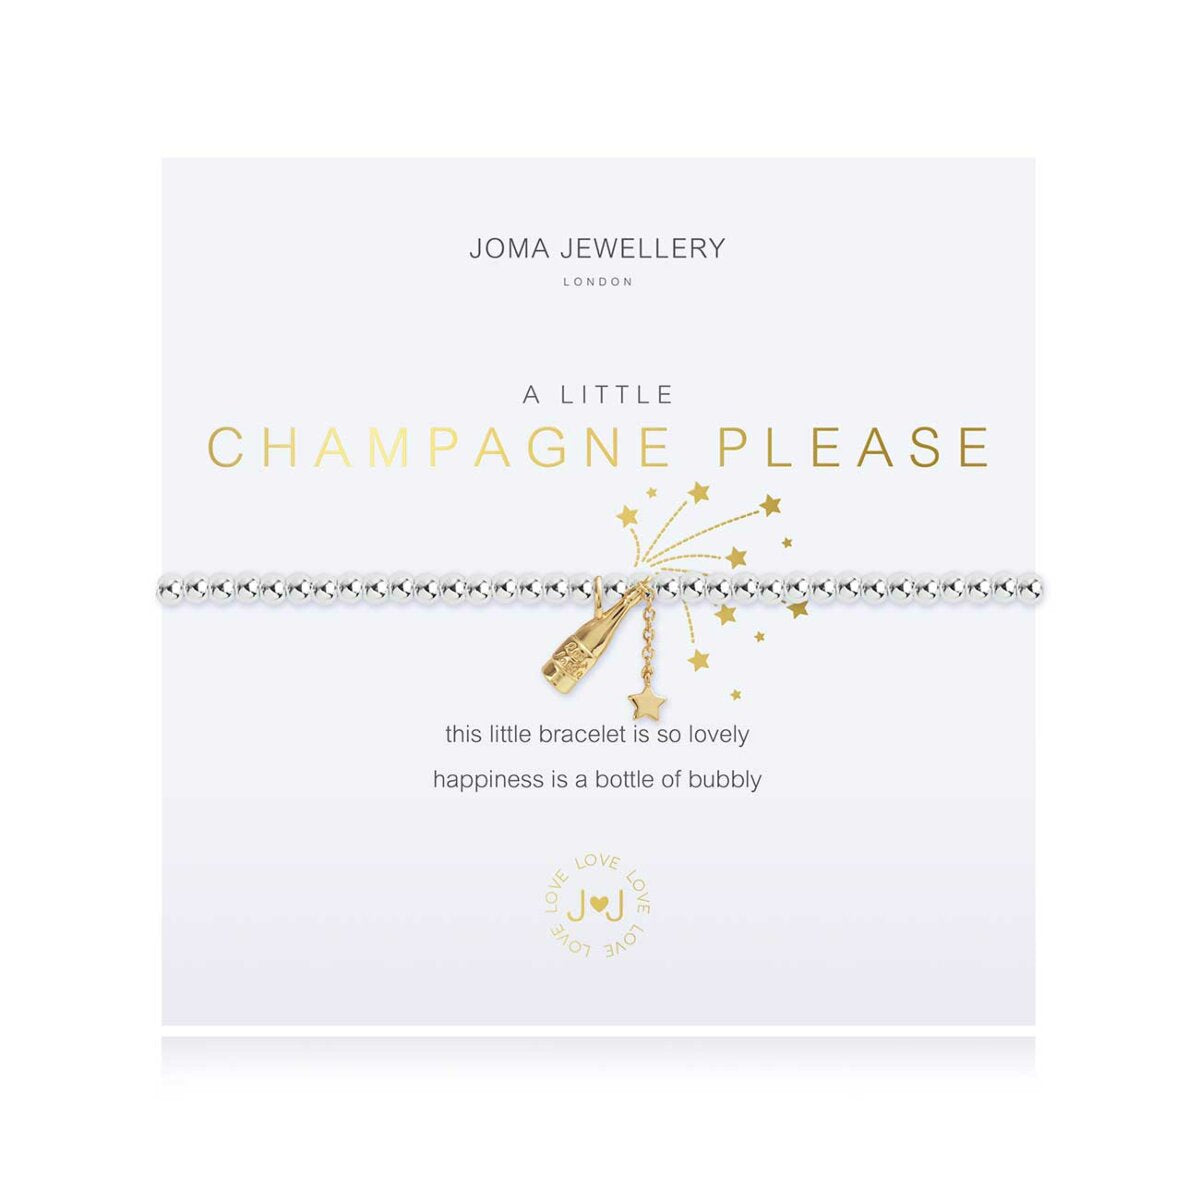 Joma Jewellery 'A Little' Champagne Please